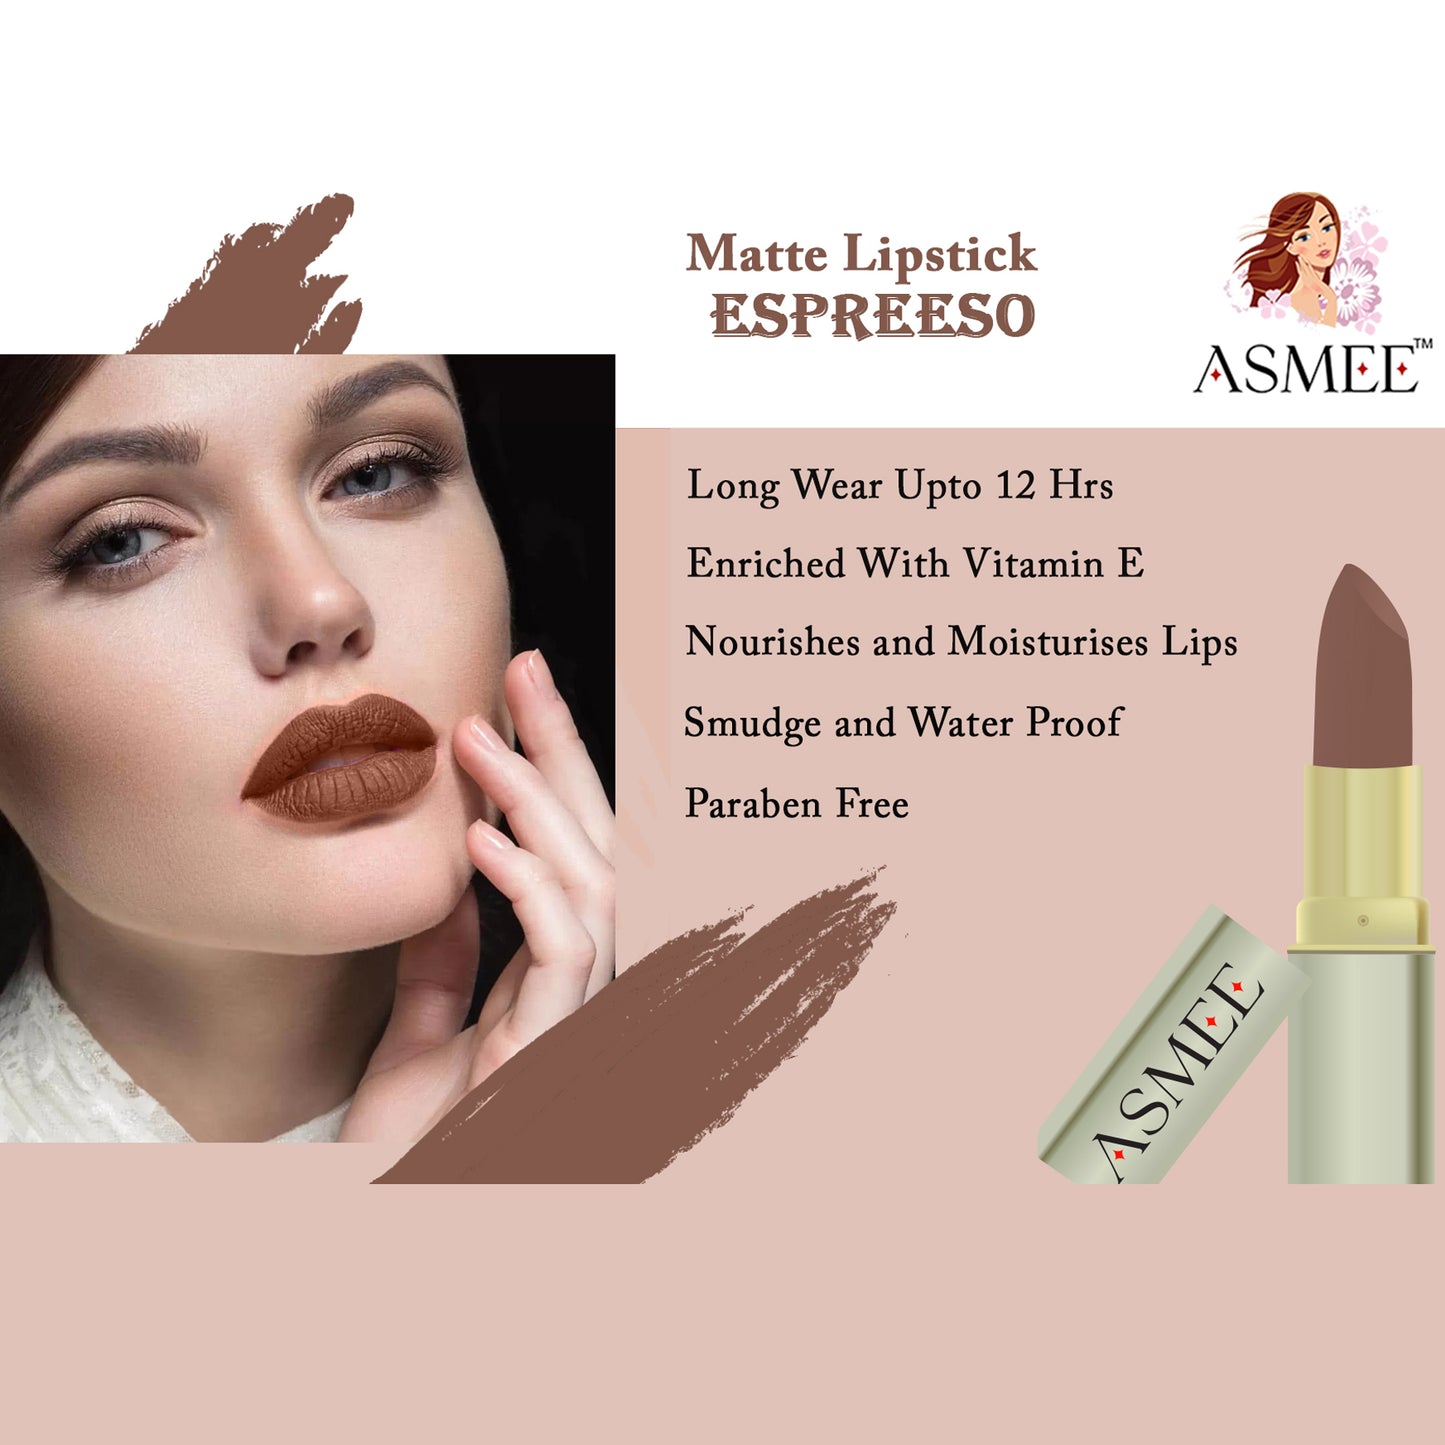 Asmee Matte Lipstick - Espresso